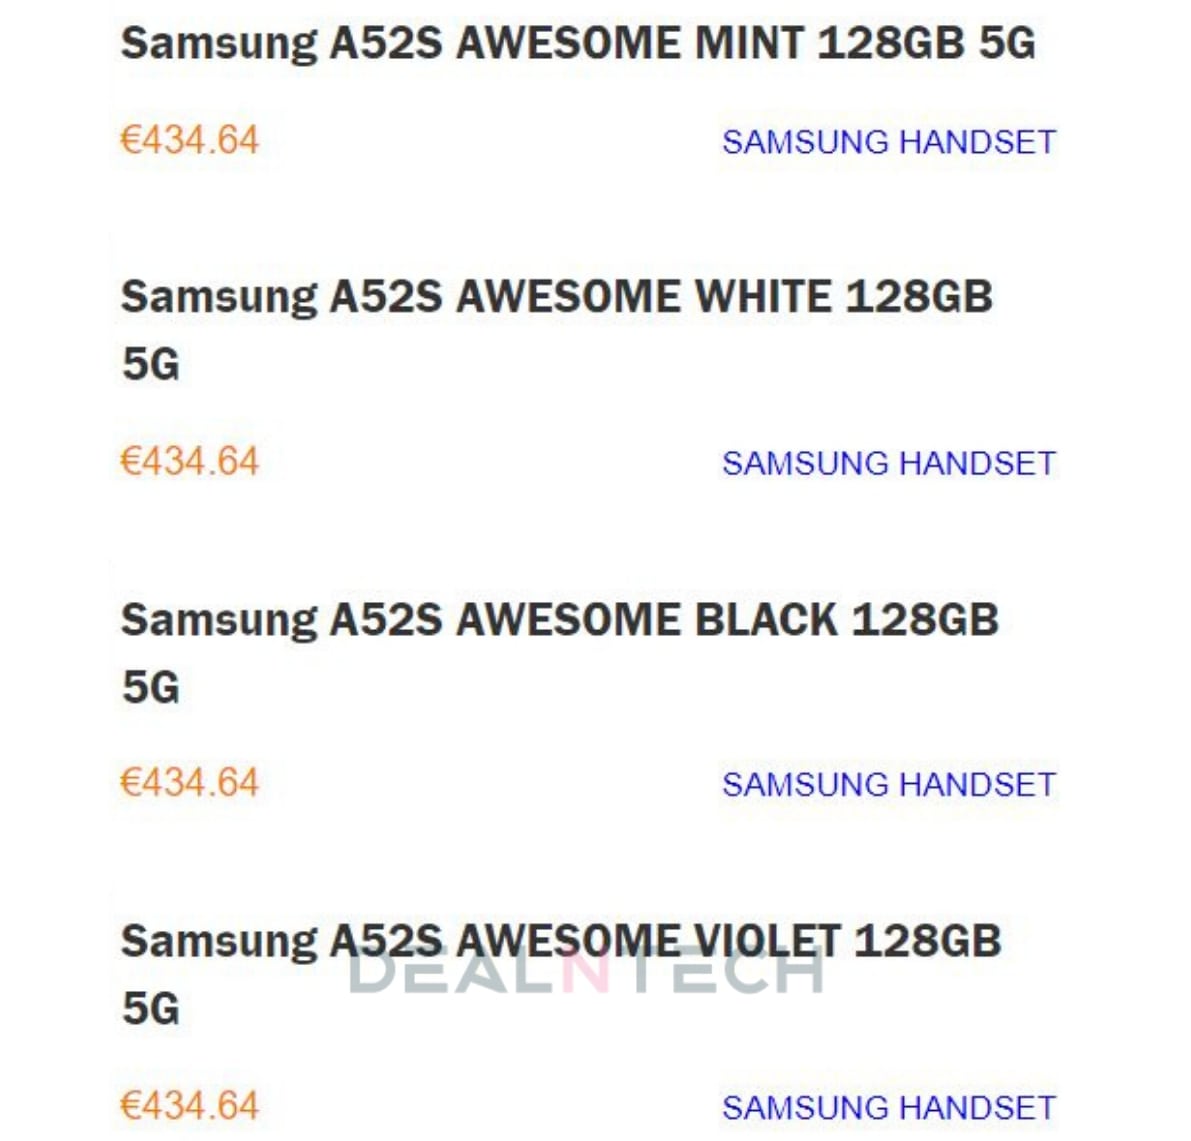 Samsung Galaxy A52s 5G pricing